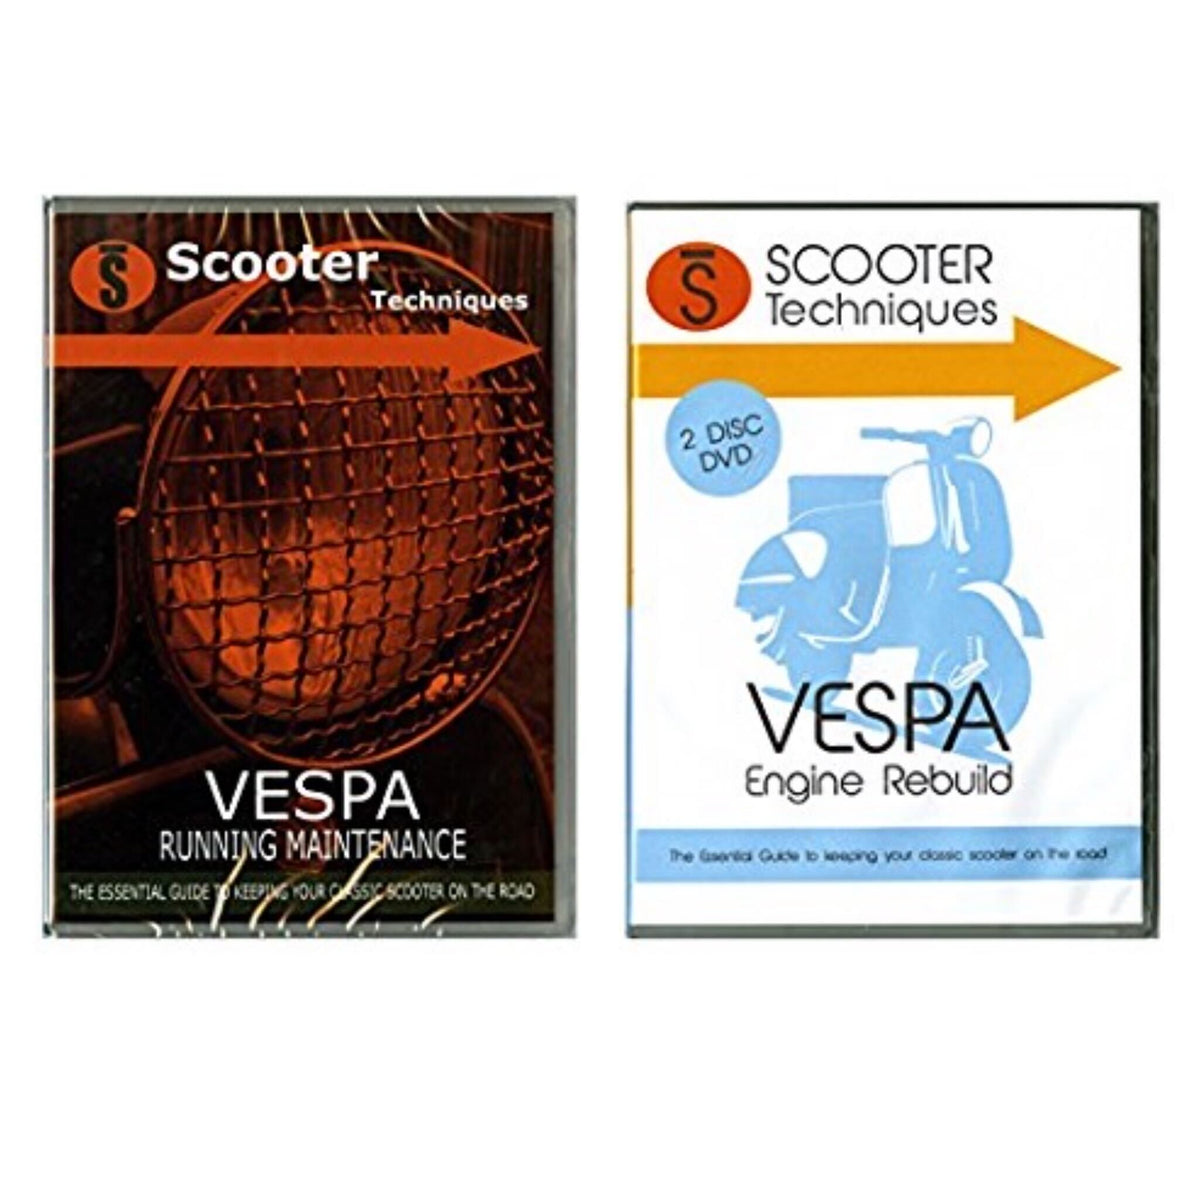 Vespa Engine Rebuild & Running Maintenance DVD Bundle - By Scooter Techniques